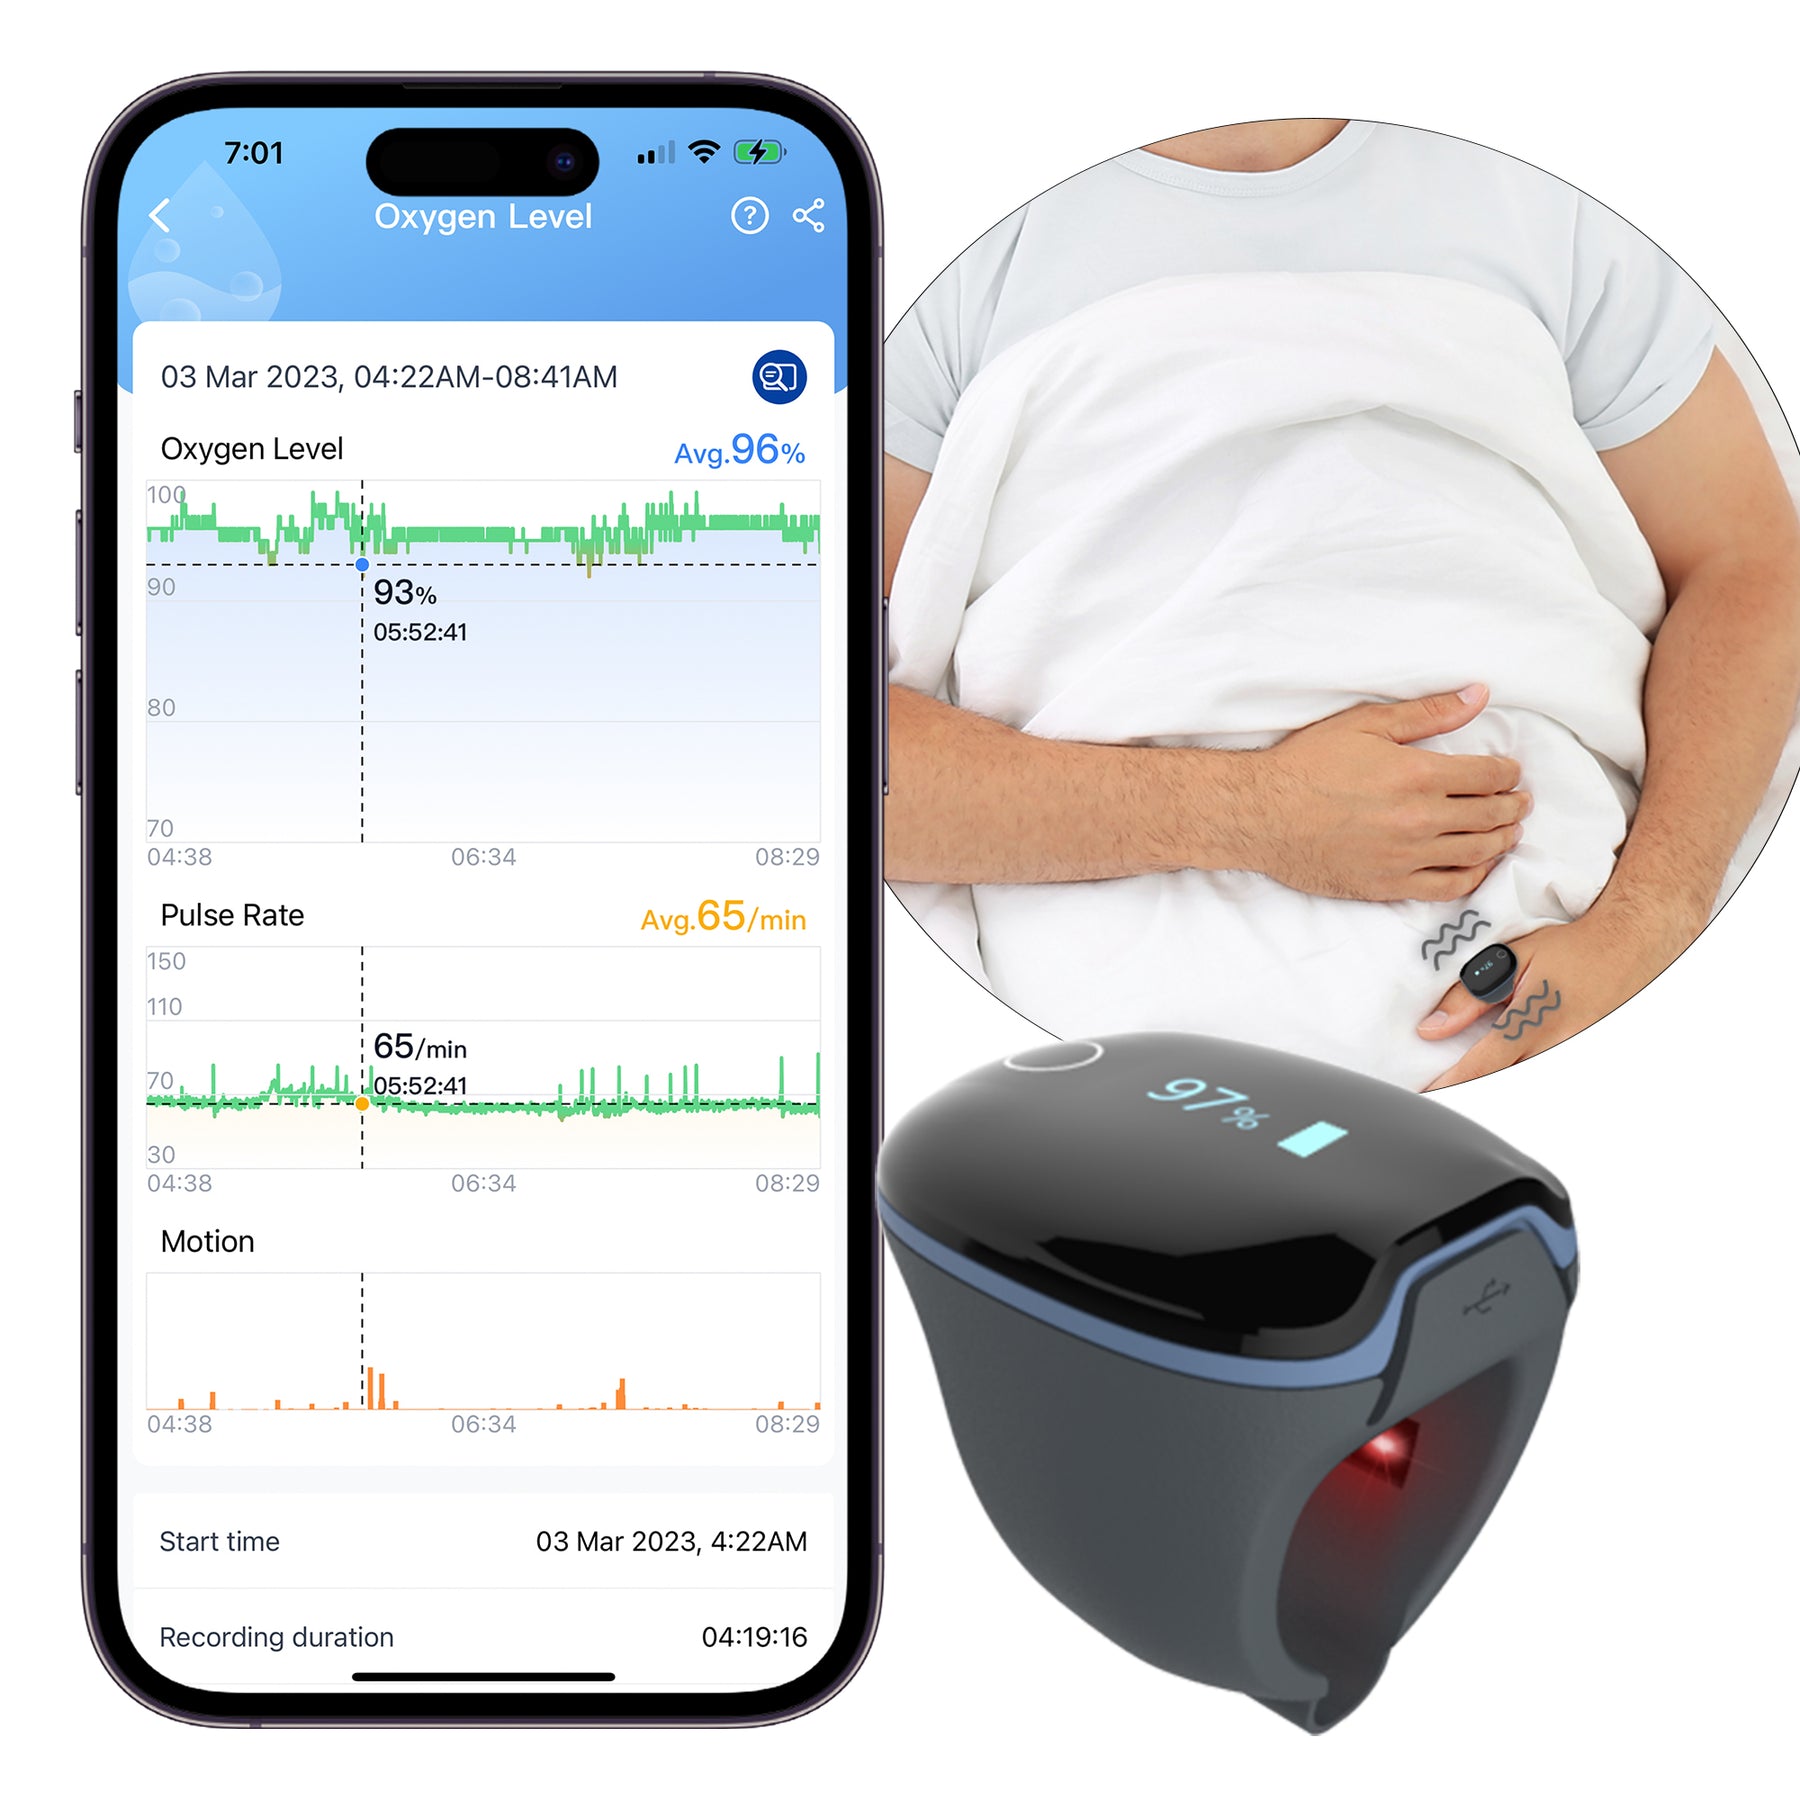 RingConn Reveals Sleep Apnea Monitoring for Its Smart Ring